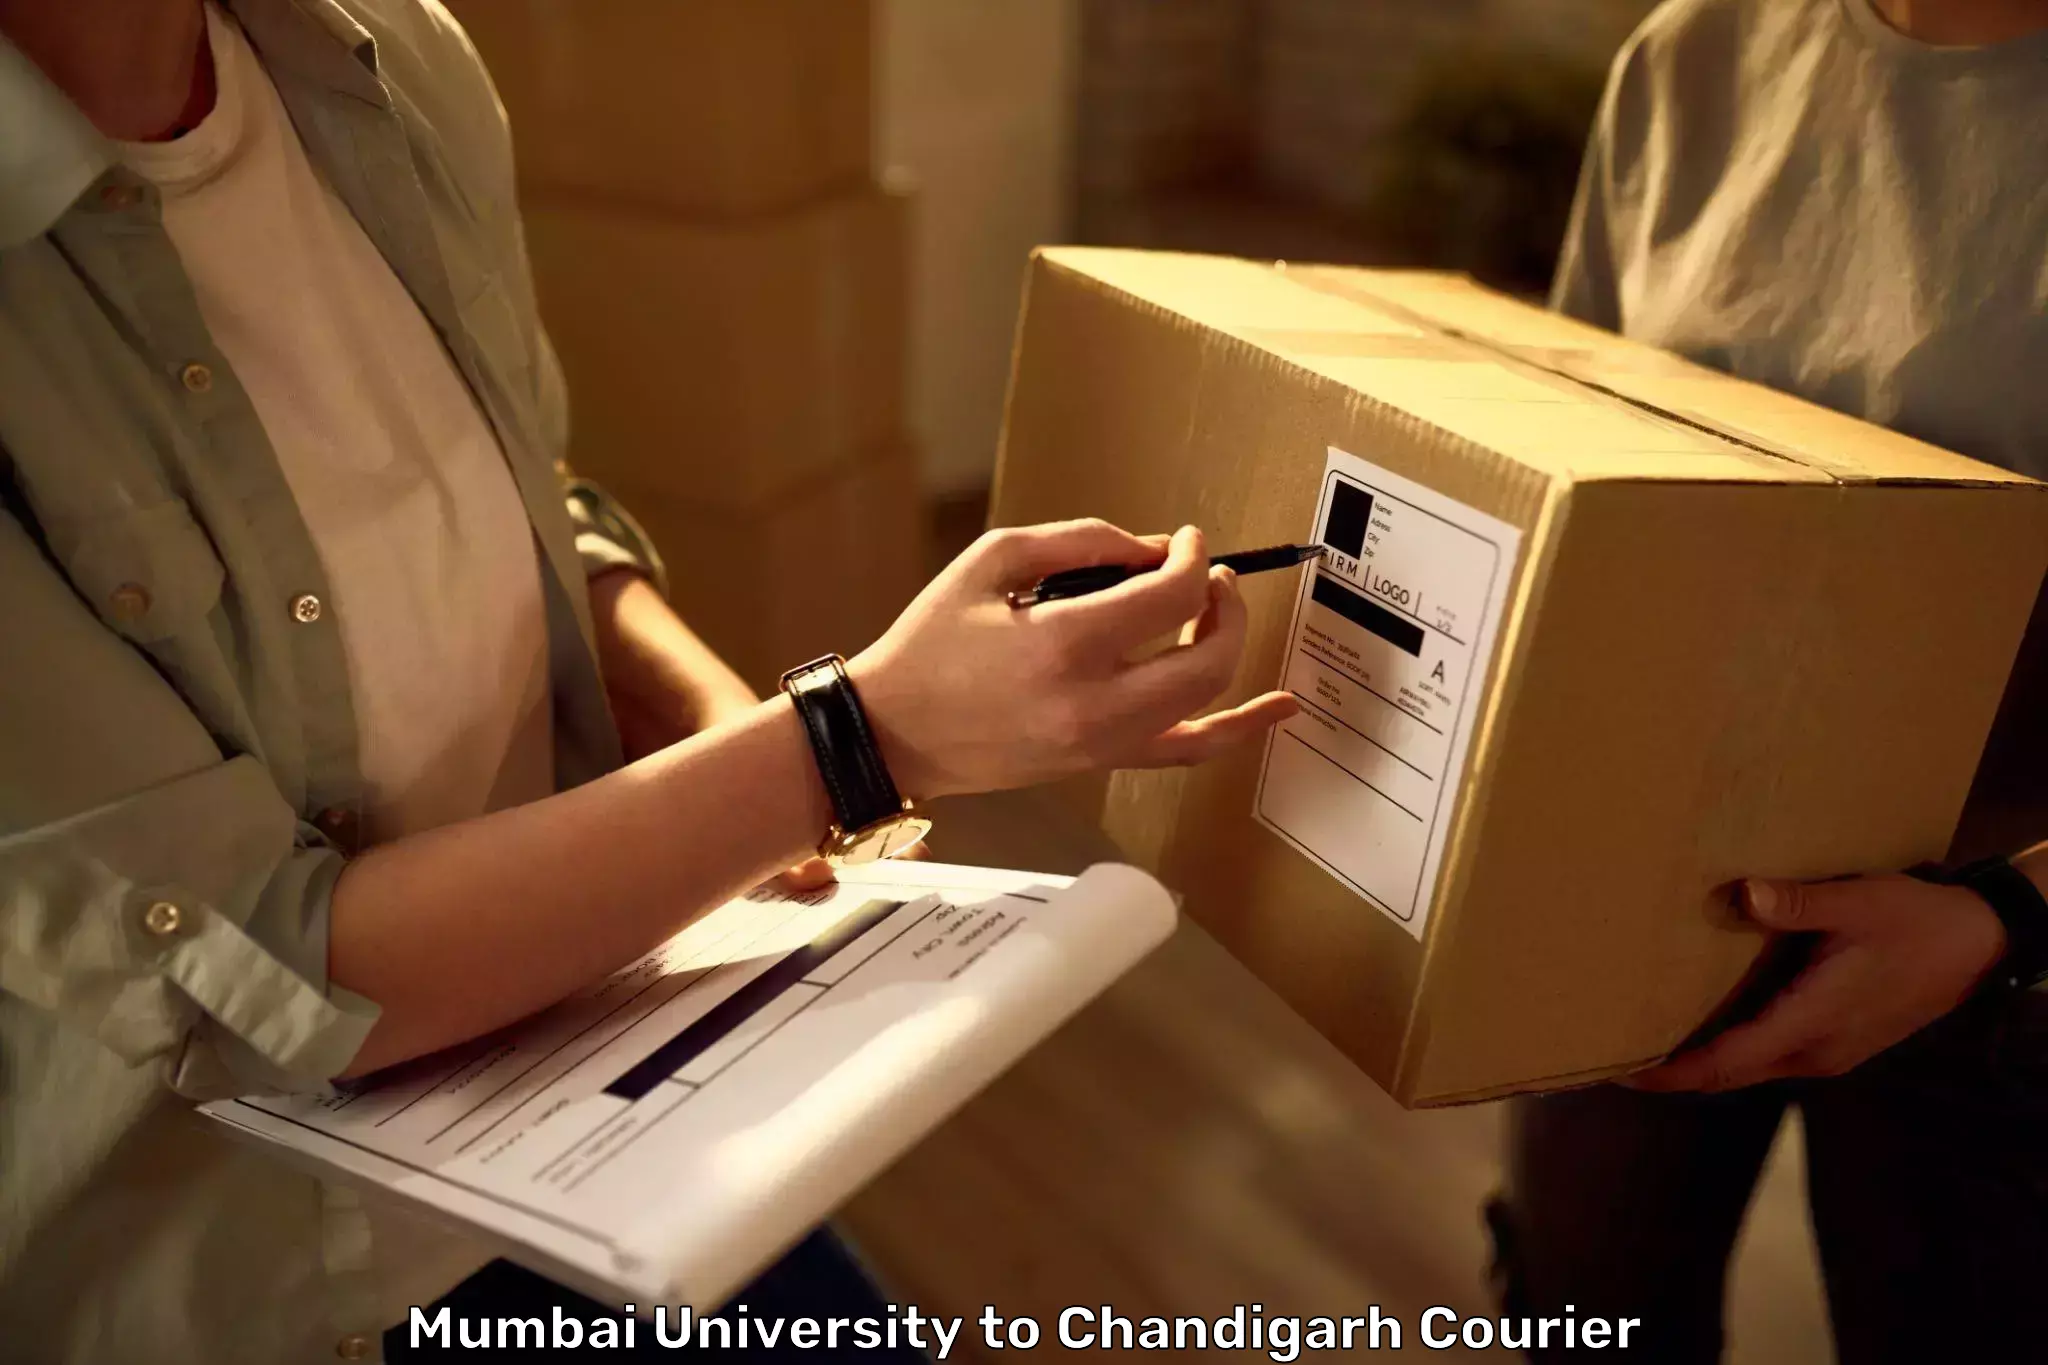 Luggage shipment tracking Mumbai University to Chandigarh